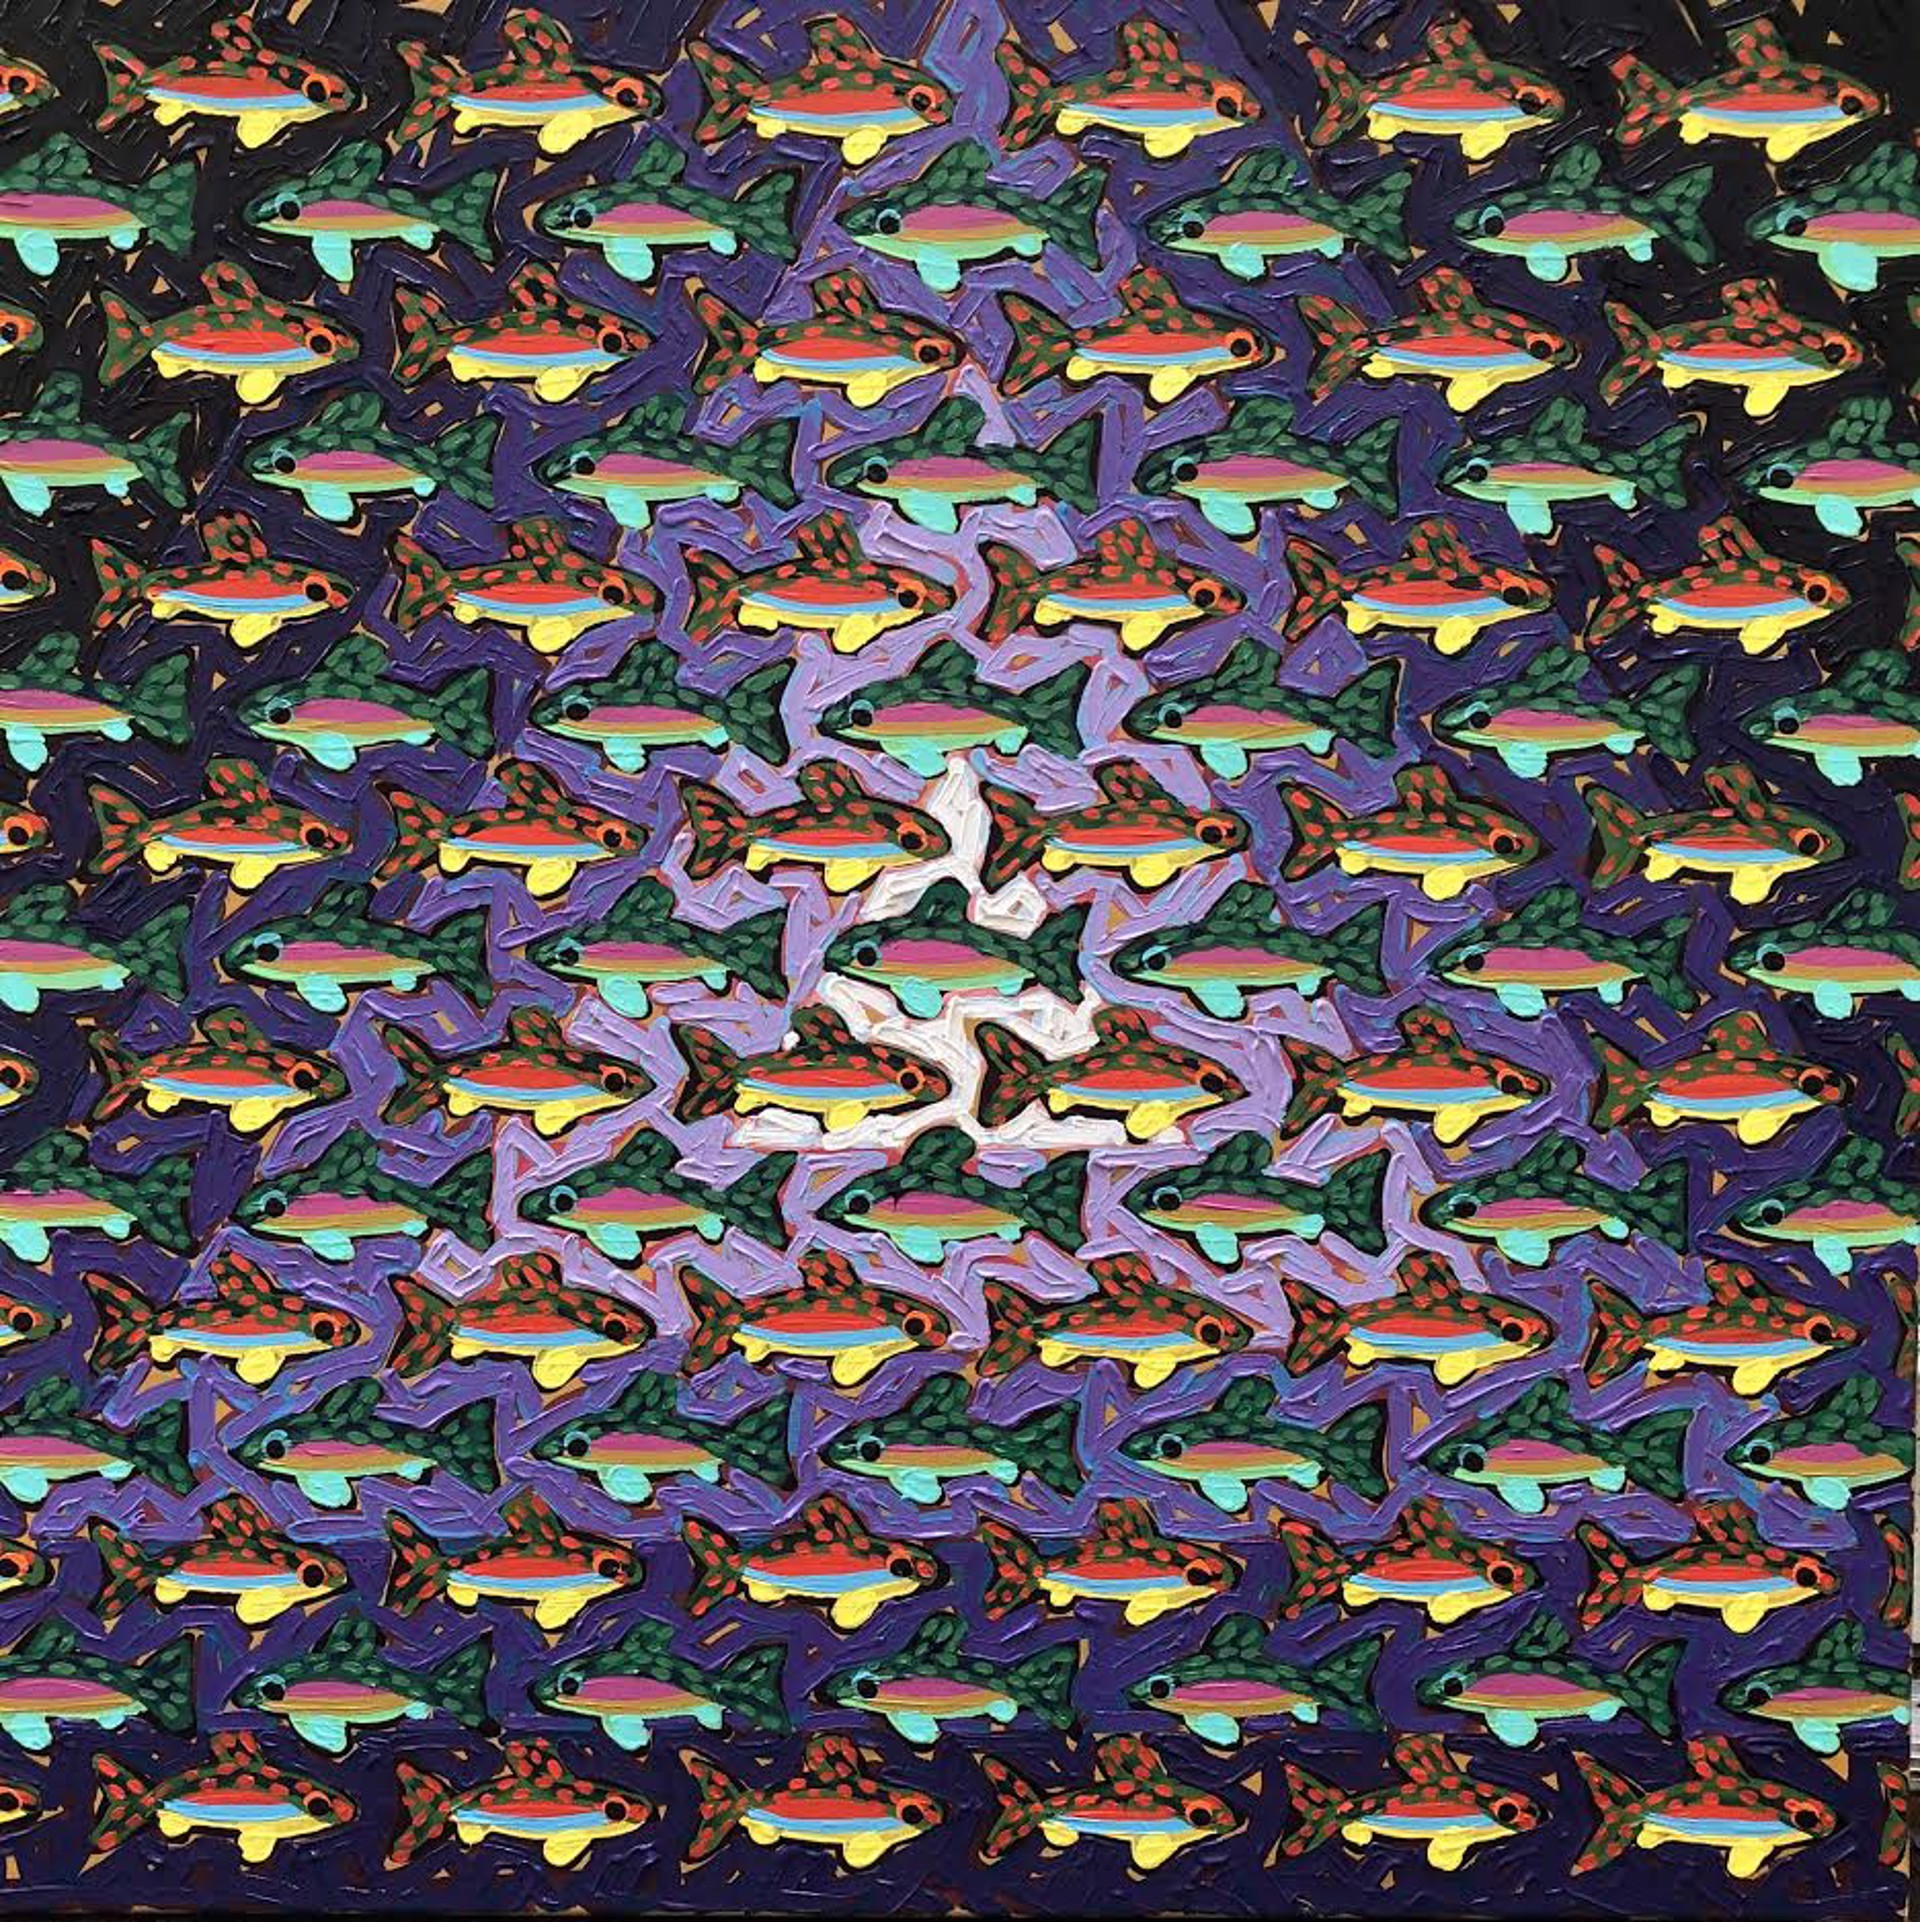 Rainbow Triangle #2 by Tom Francis